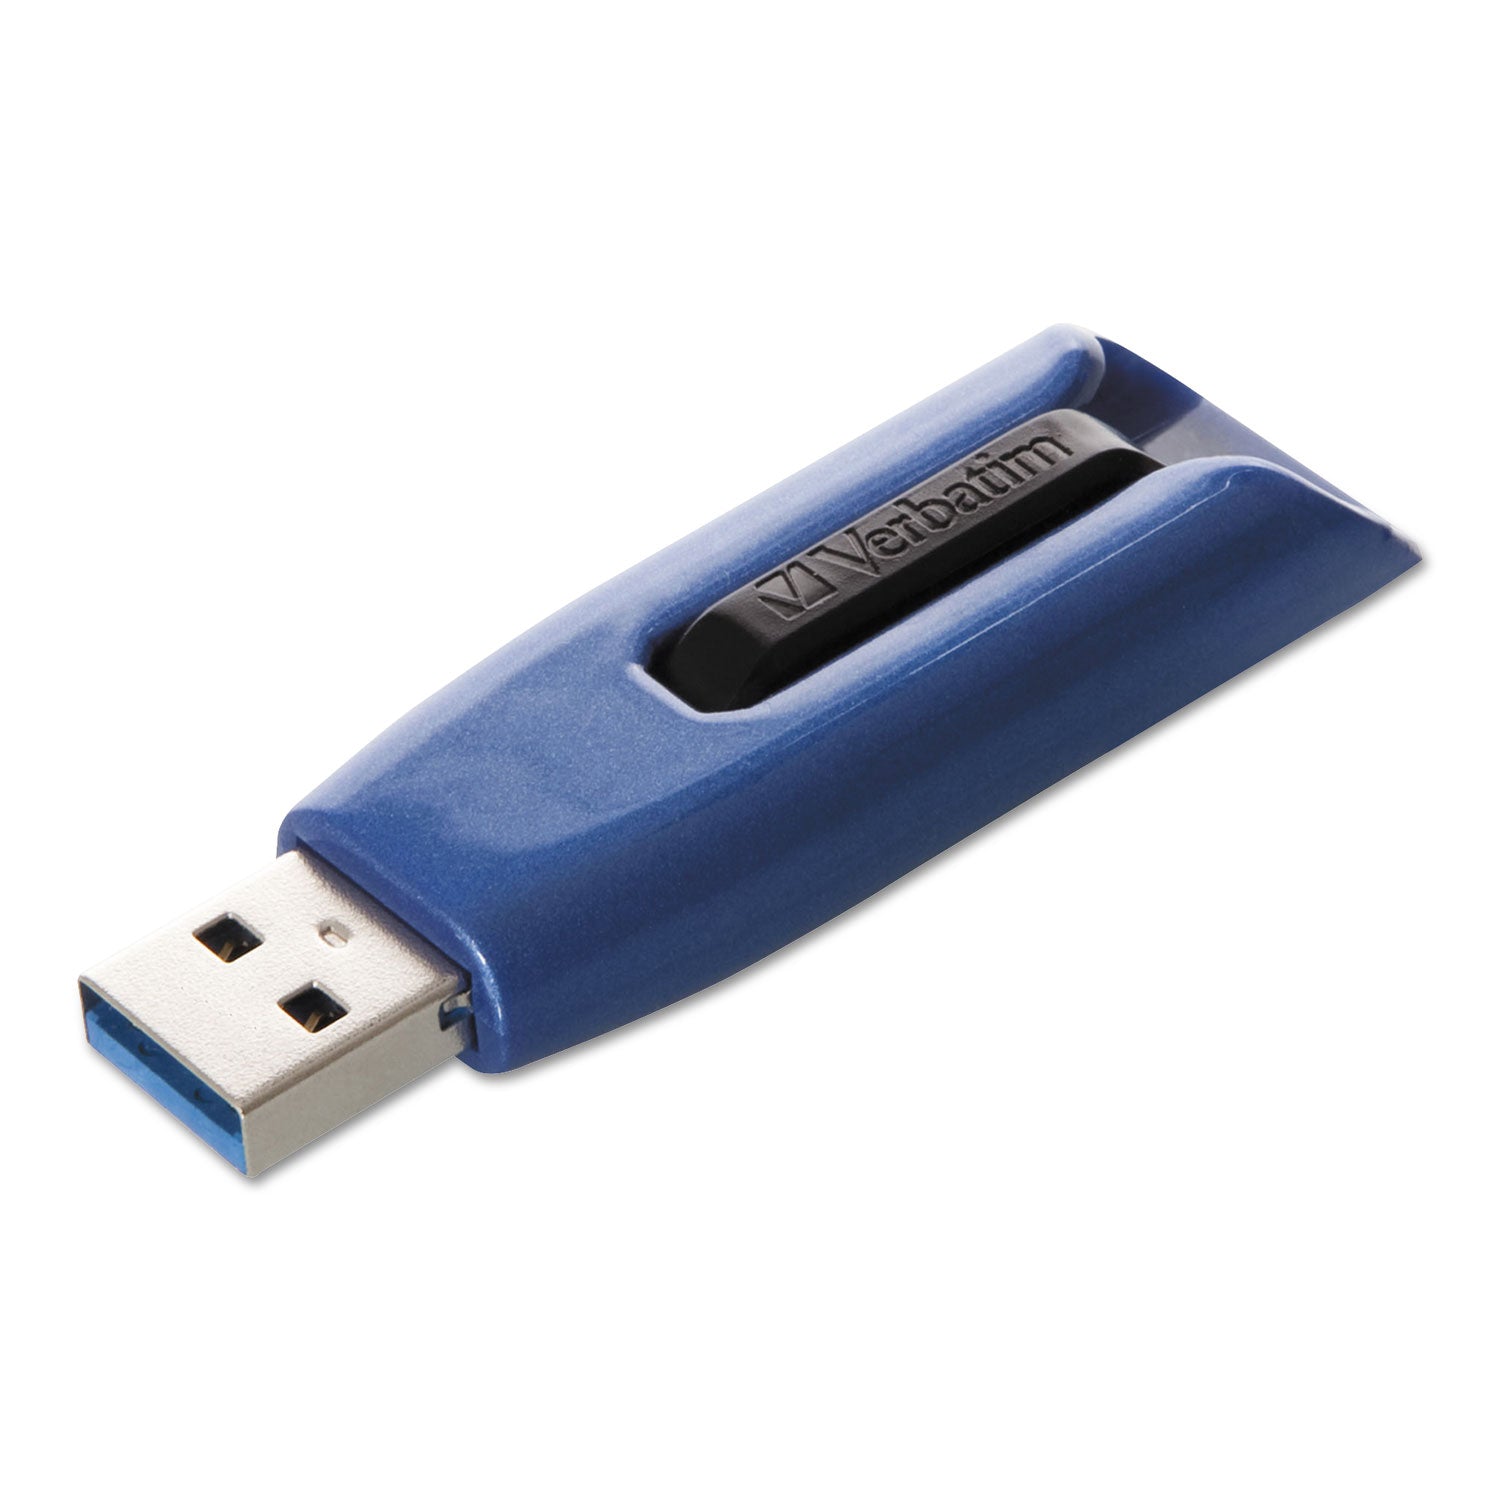 v3-max-usb-30-flash-drive-256-gb-blue_ver49809 - 1